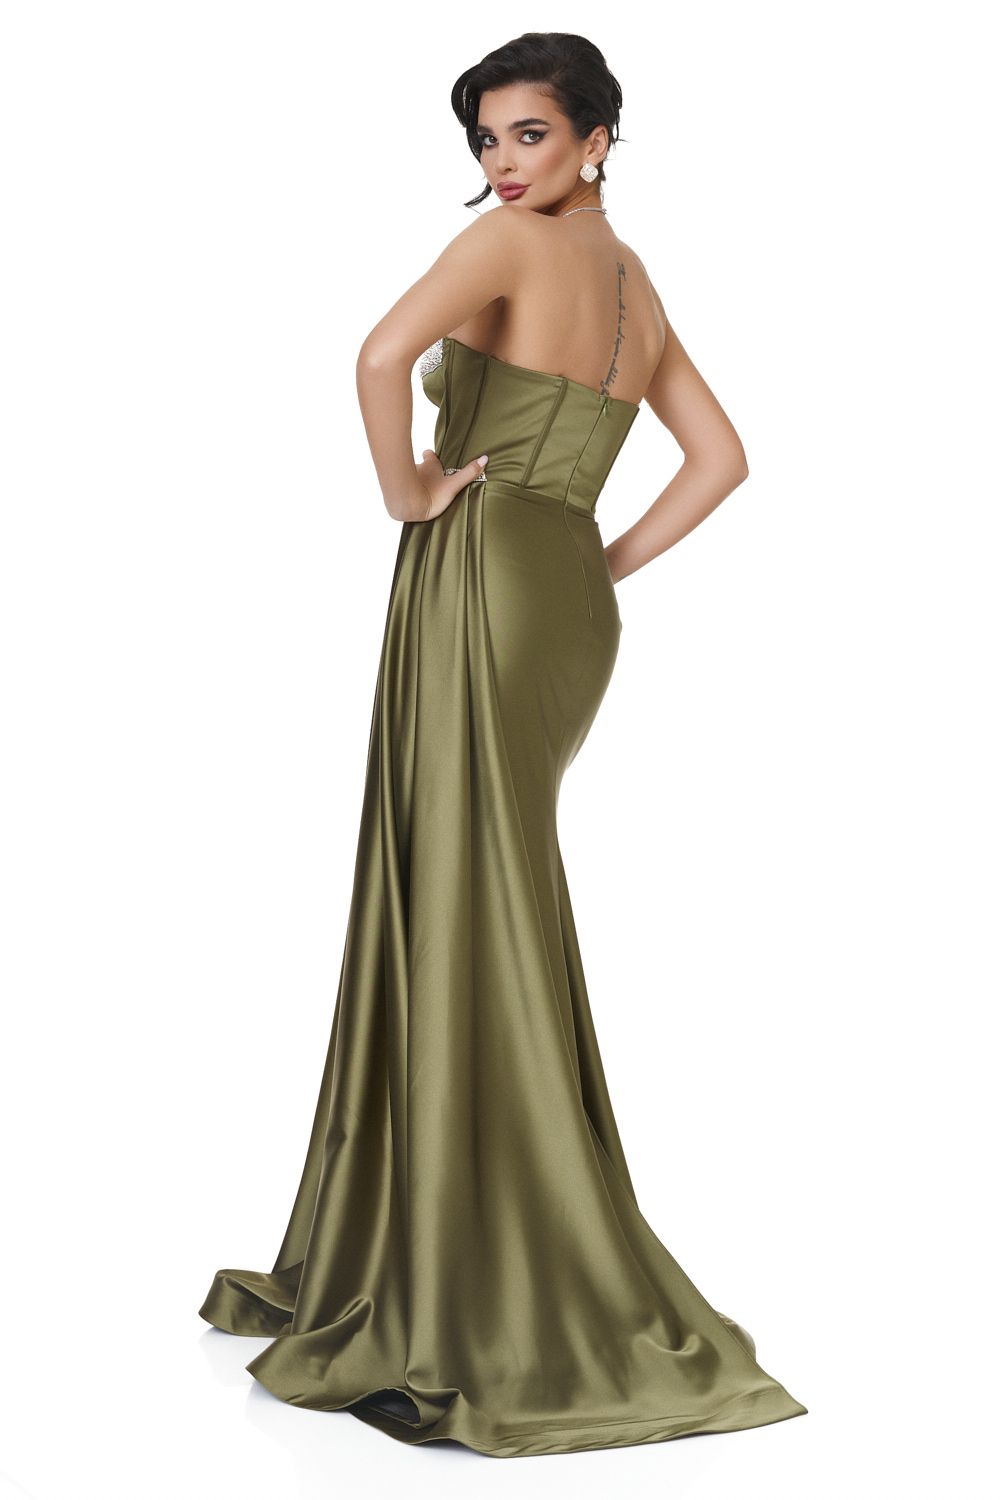 Venetzia Bogas khaki long dress for ladies